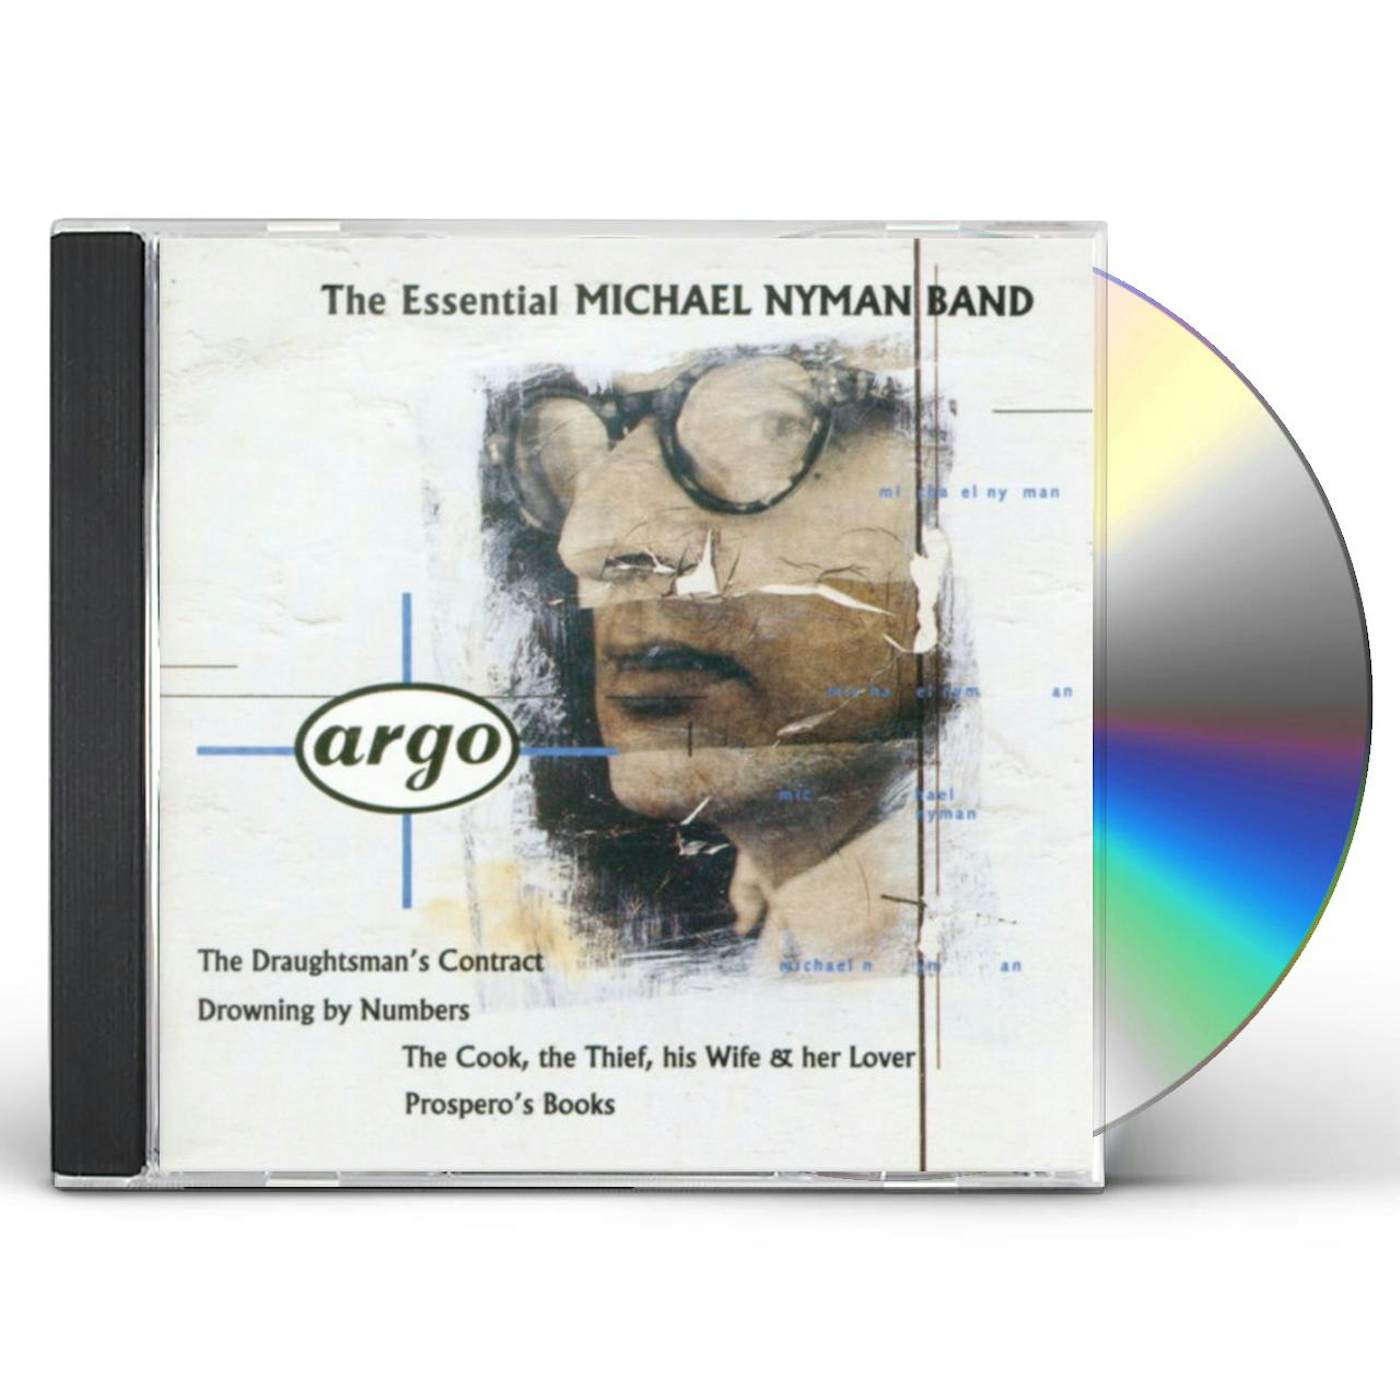 ESSENTIAL MICHAEL NYMAN BAND CD